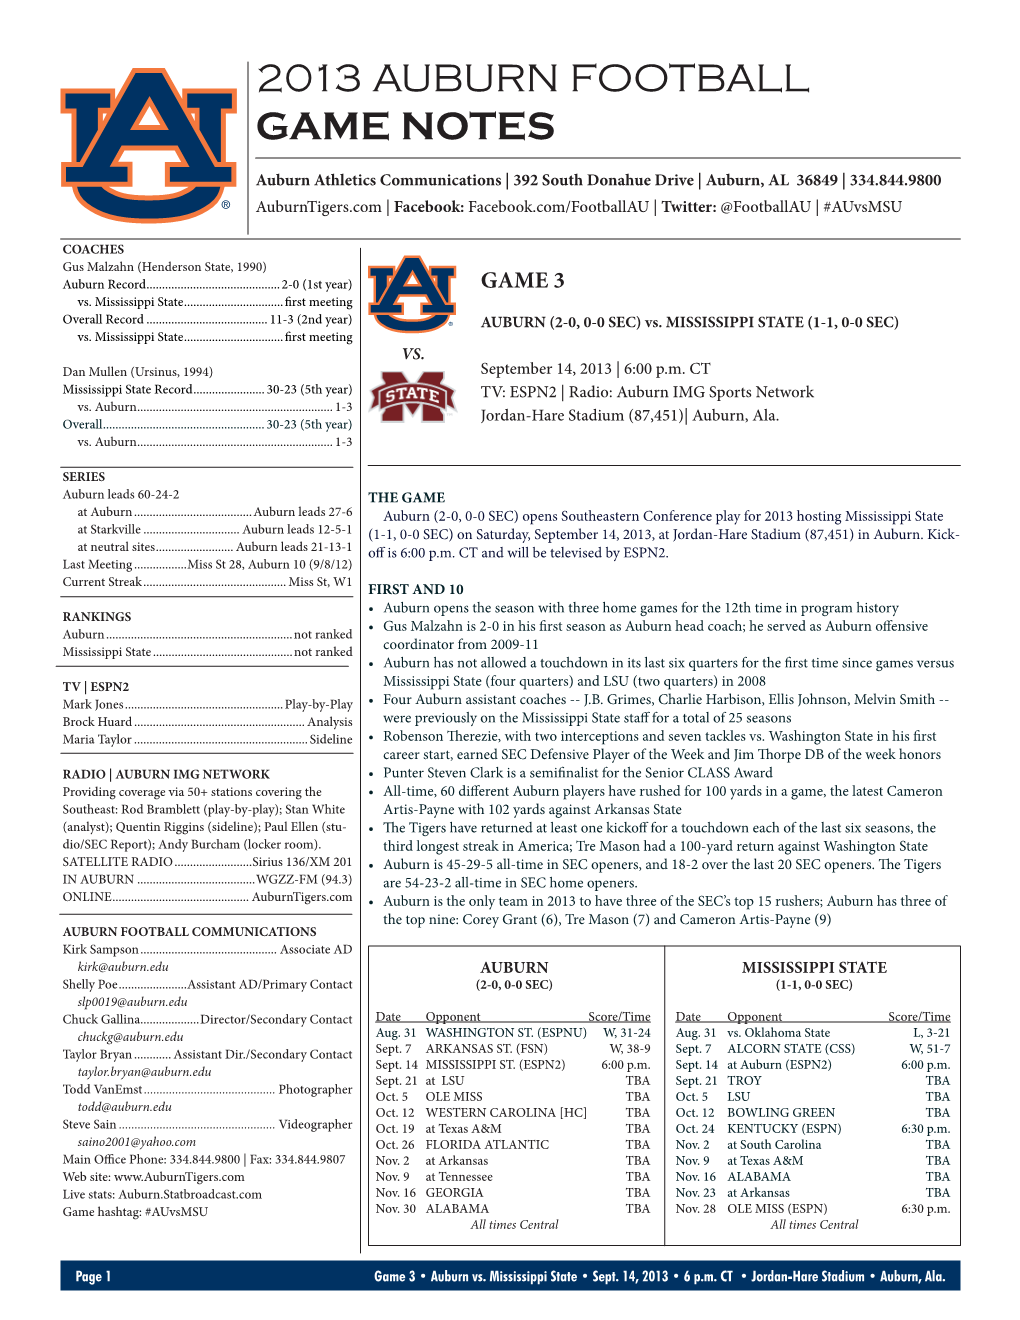 2013 Auburn Football Game Notes